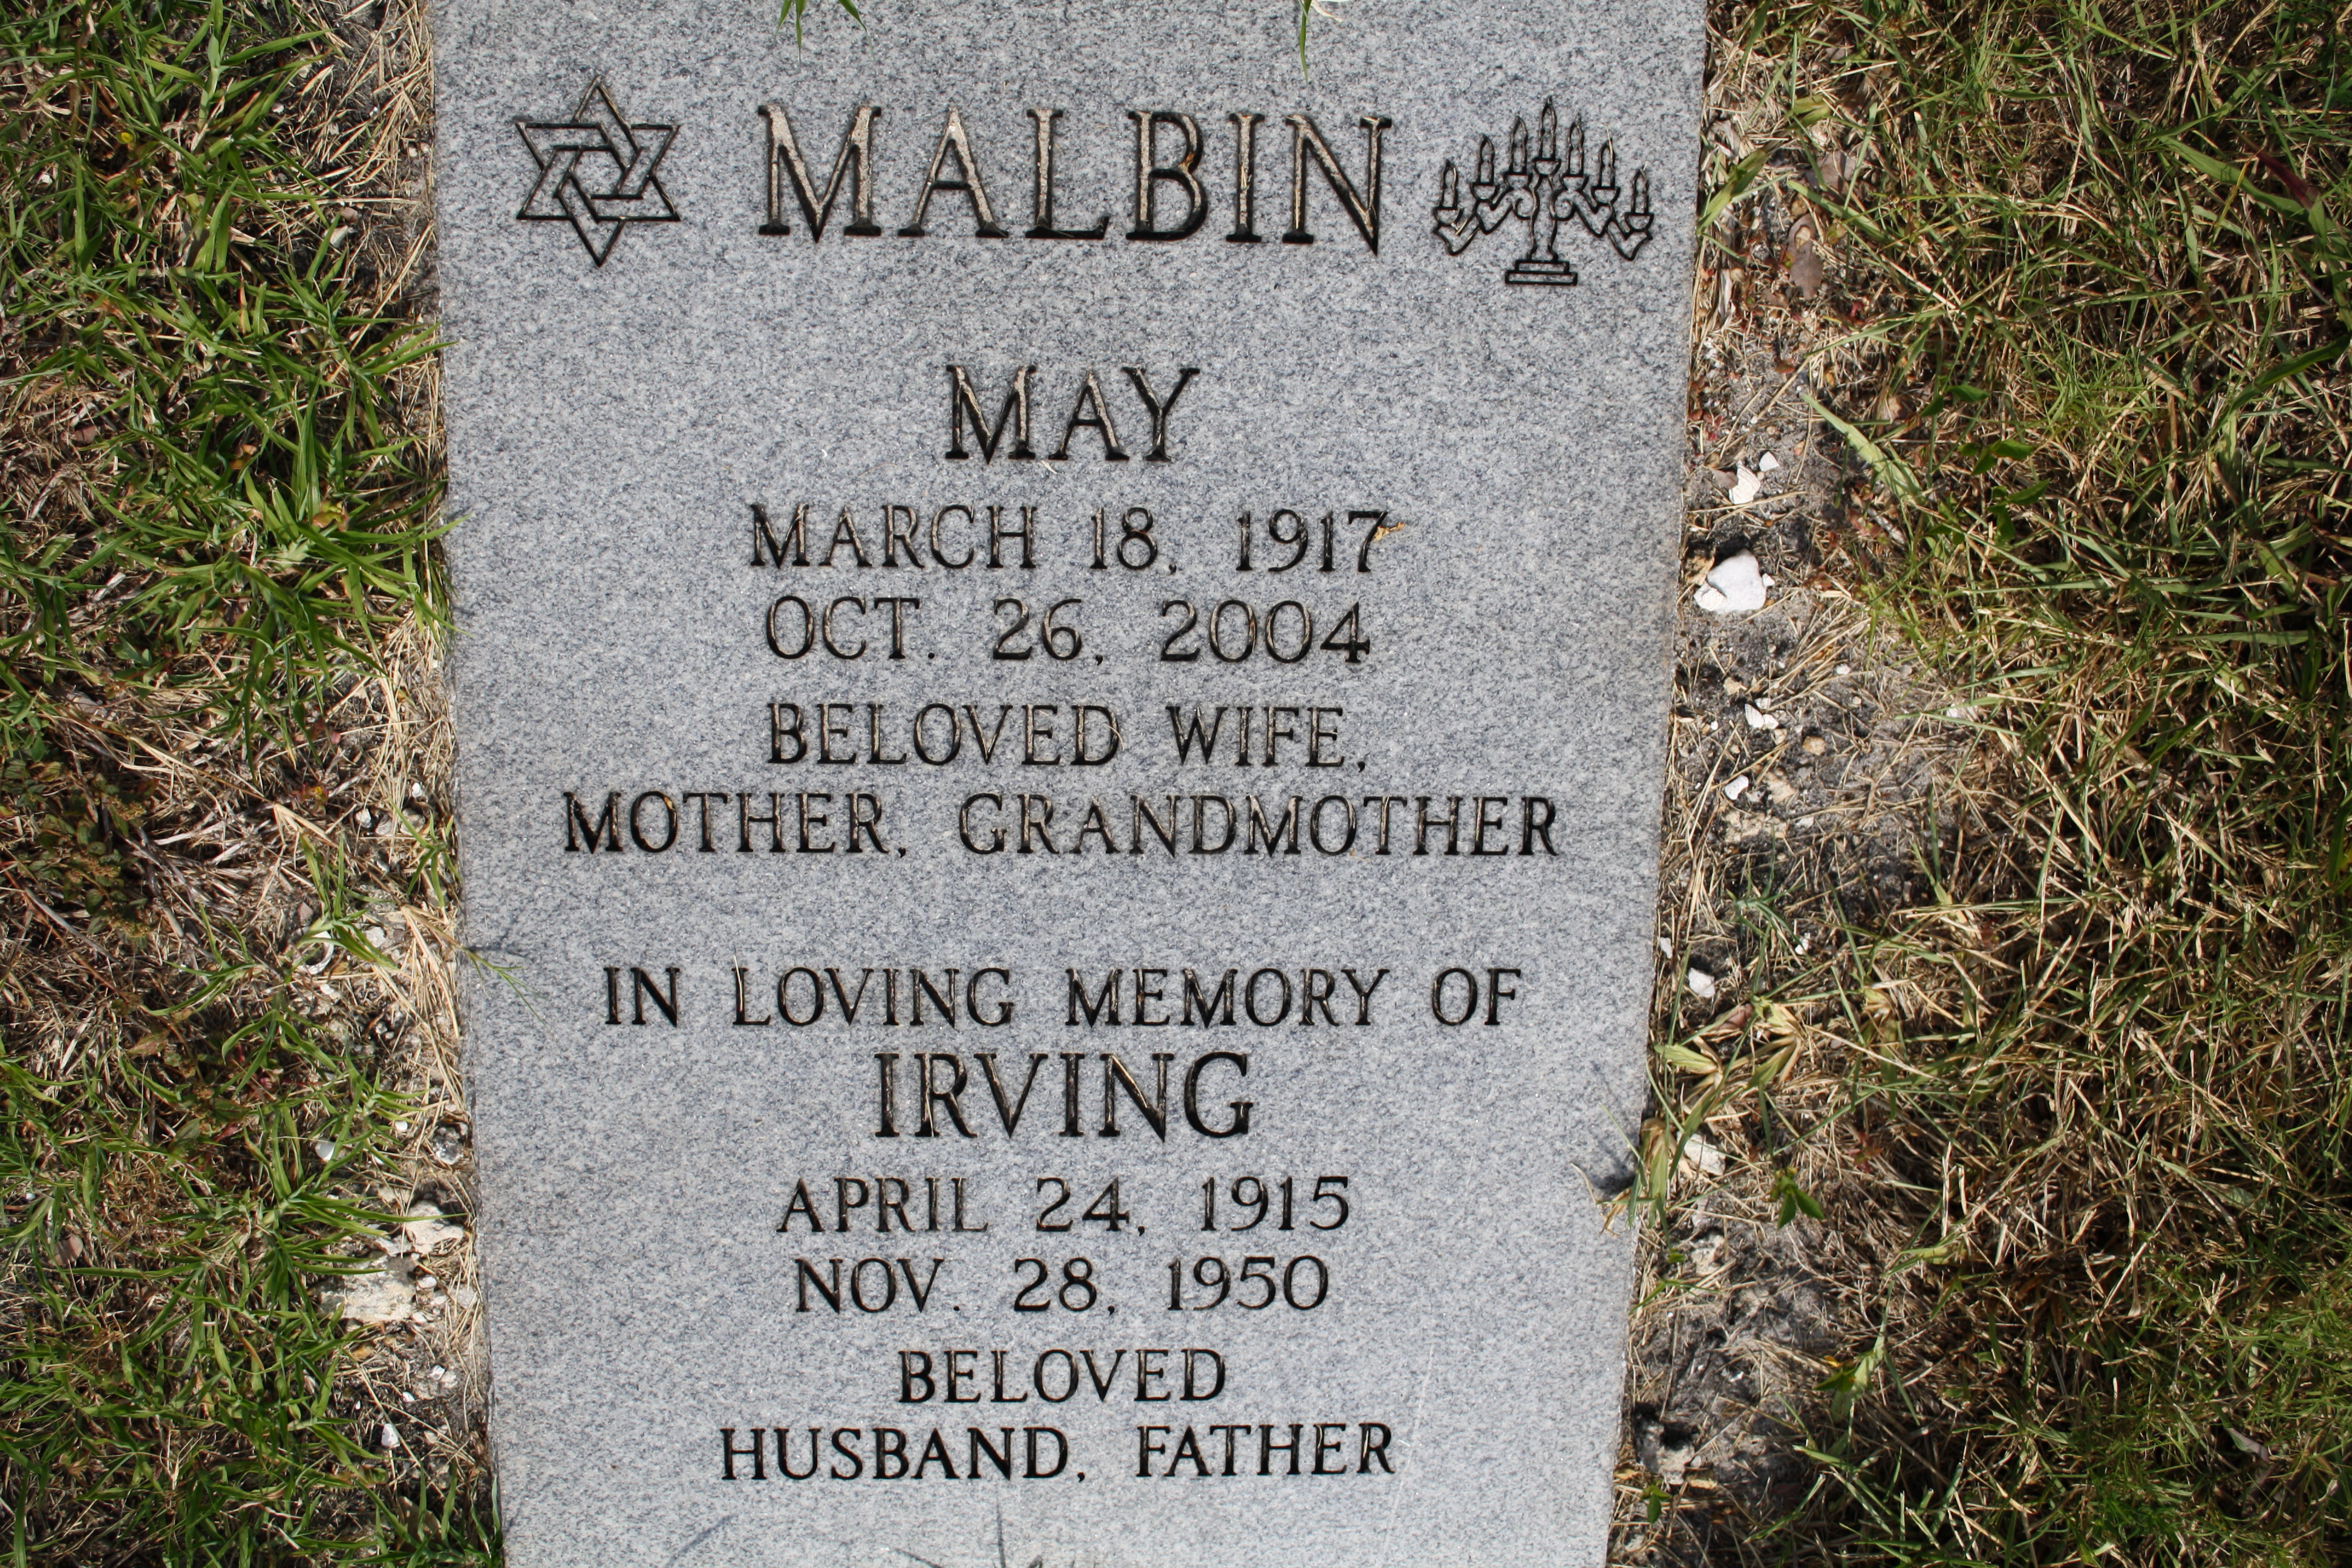 May Malbin